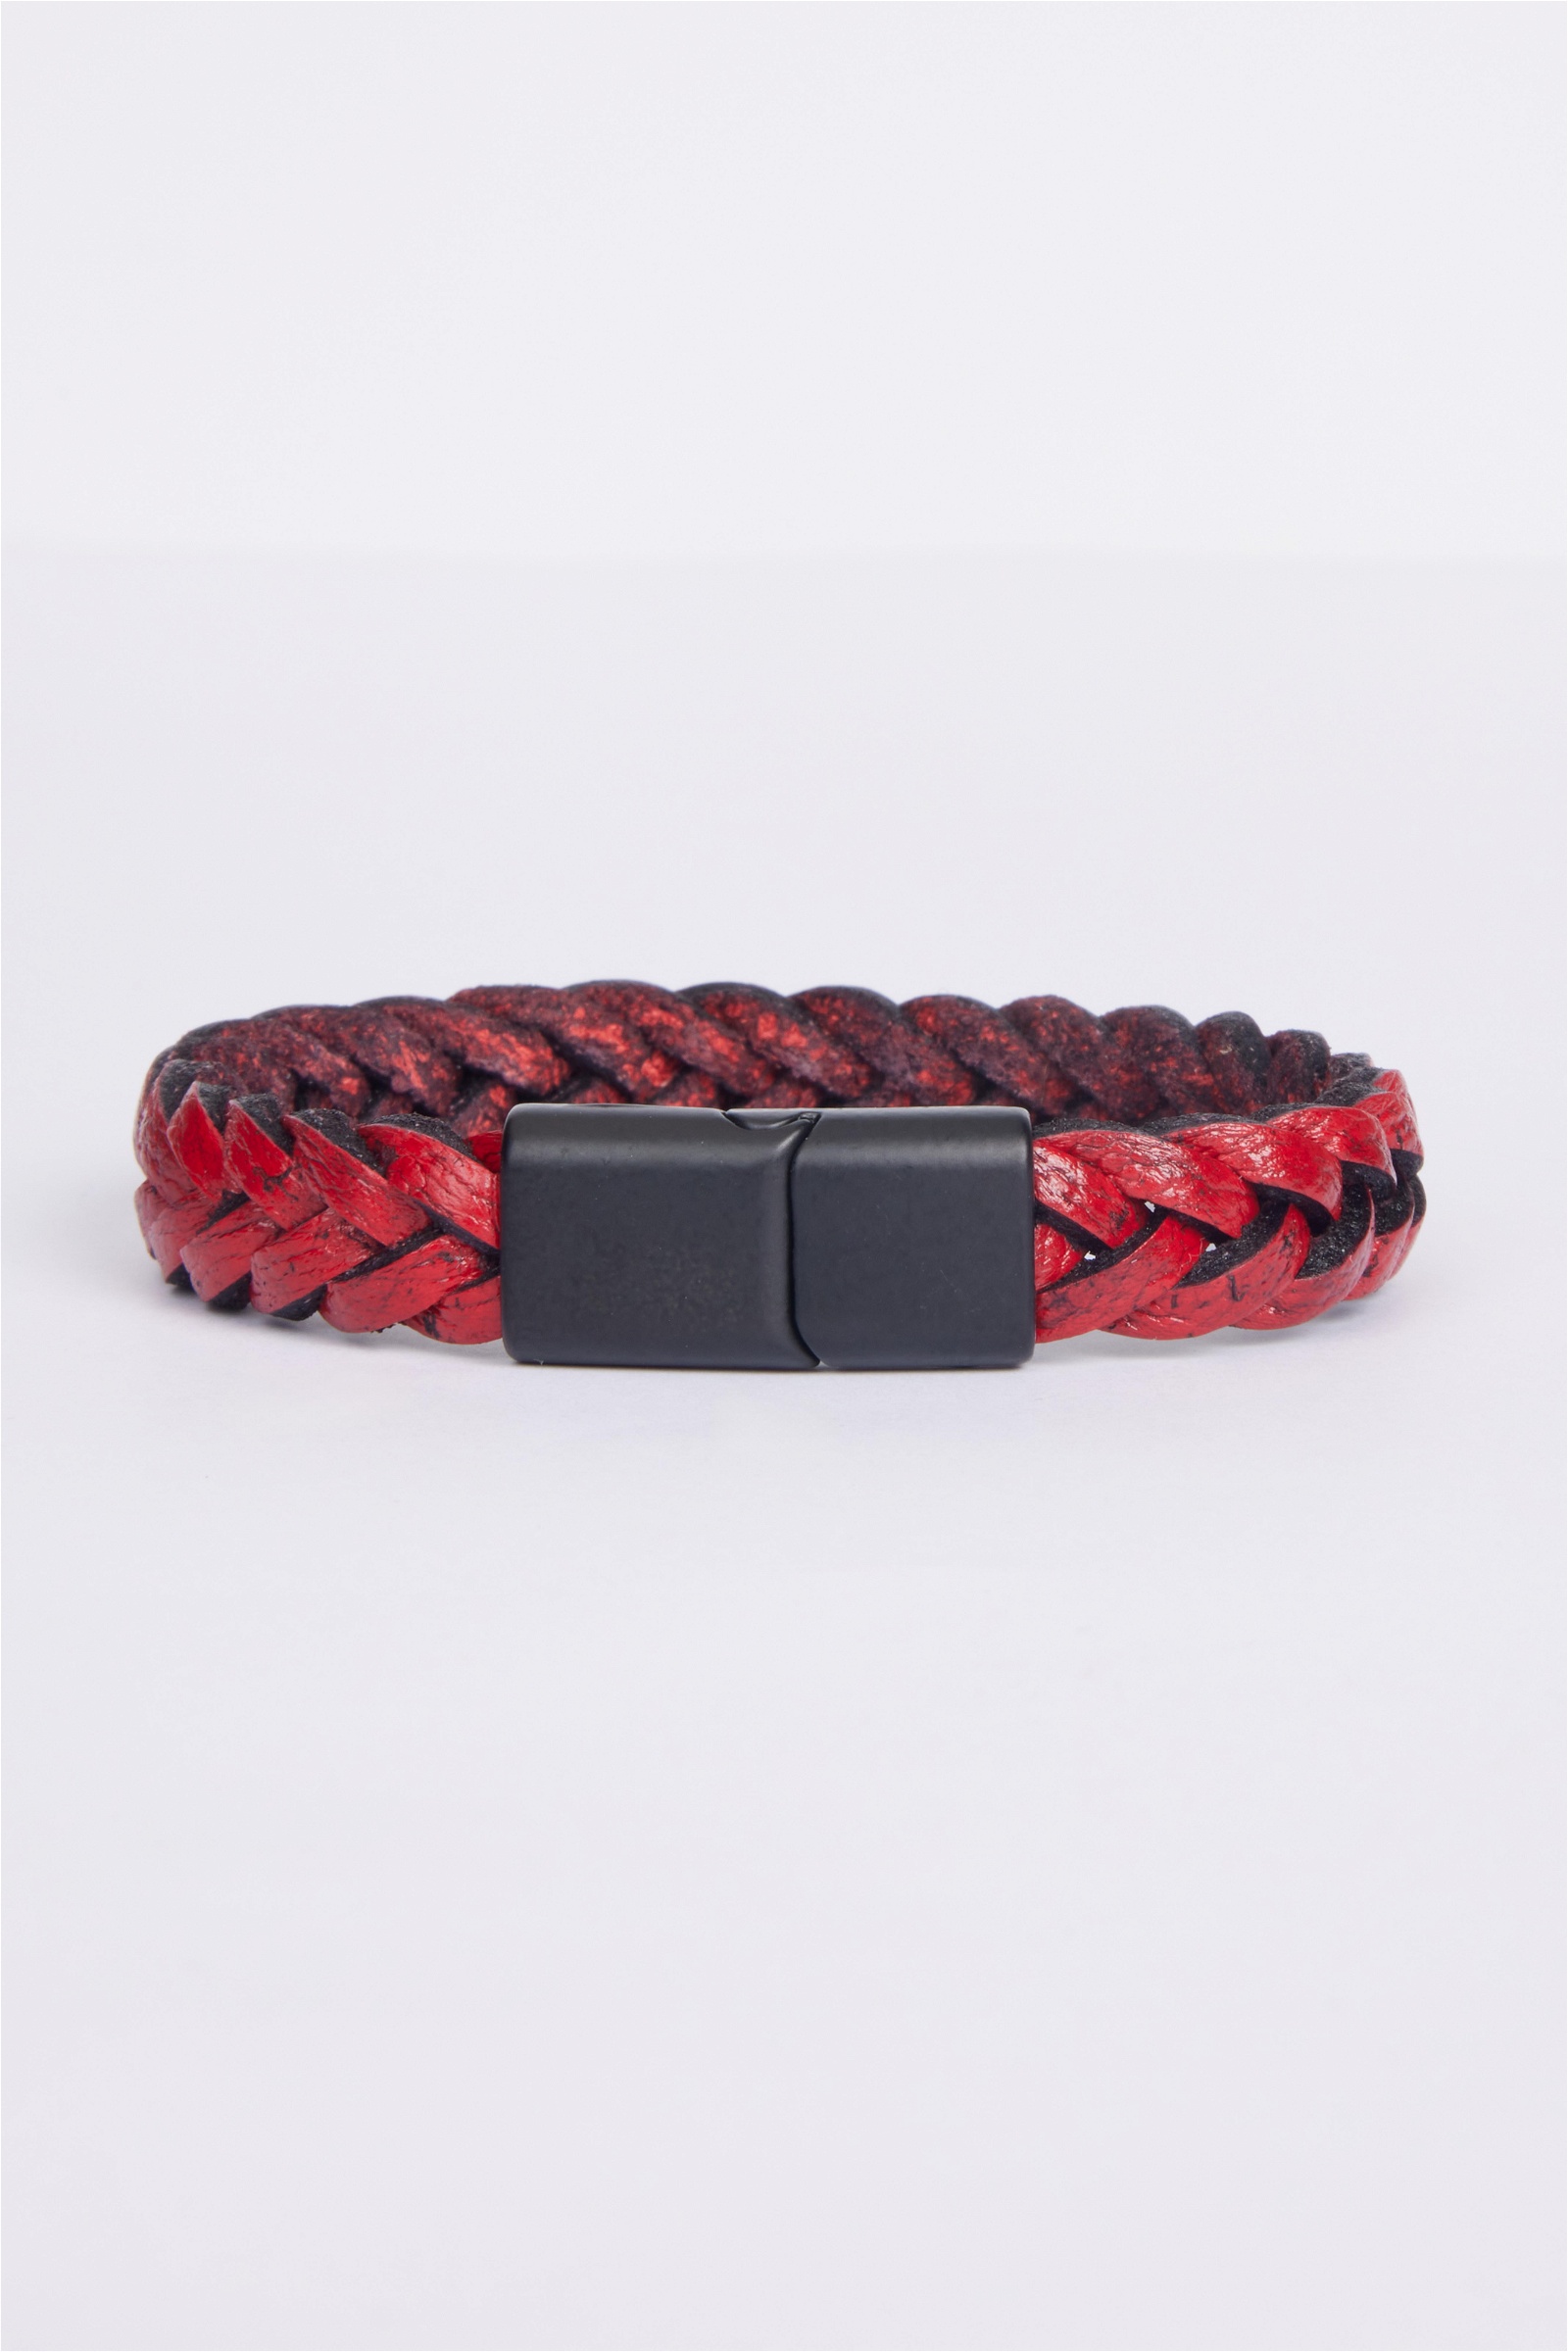 Leather Red Bracelet